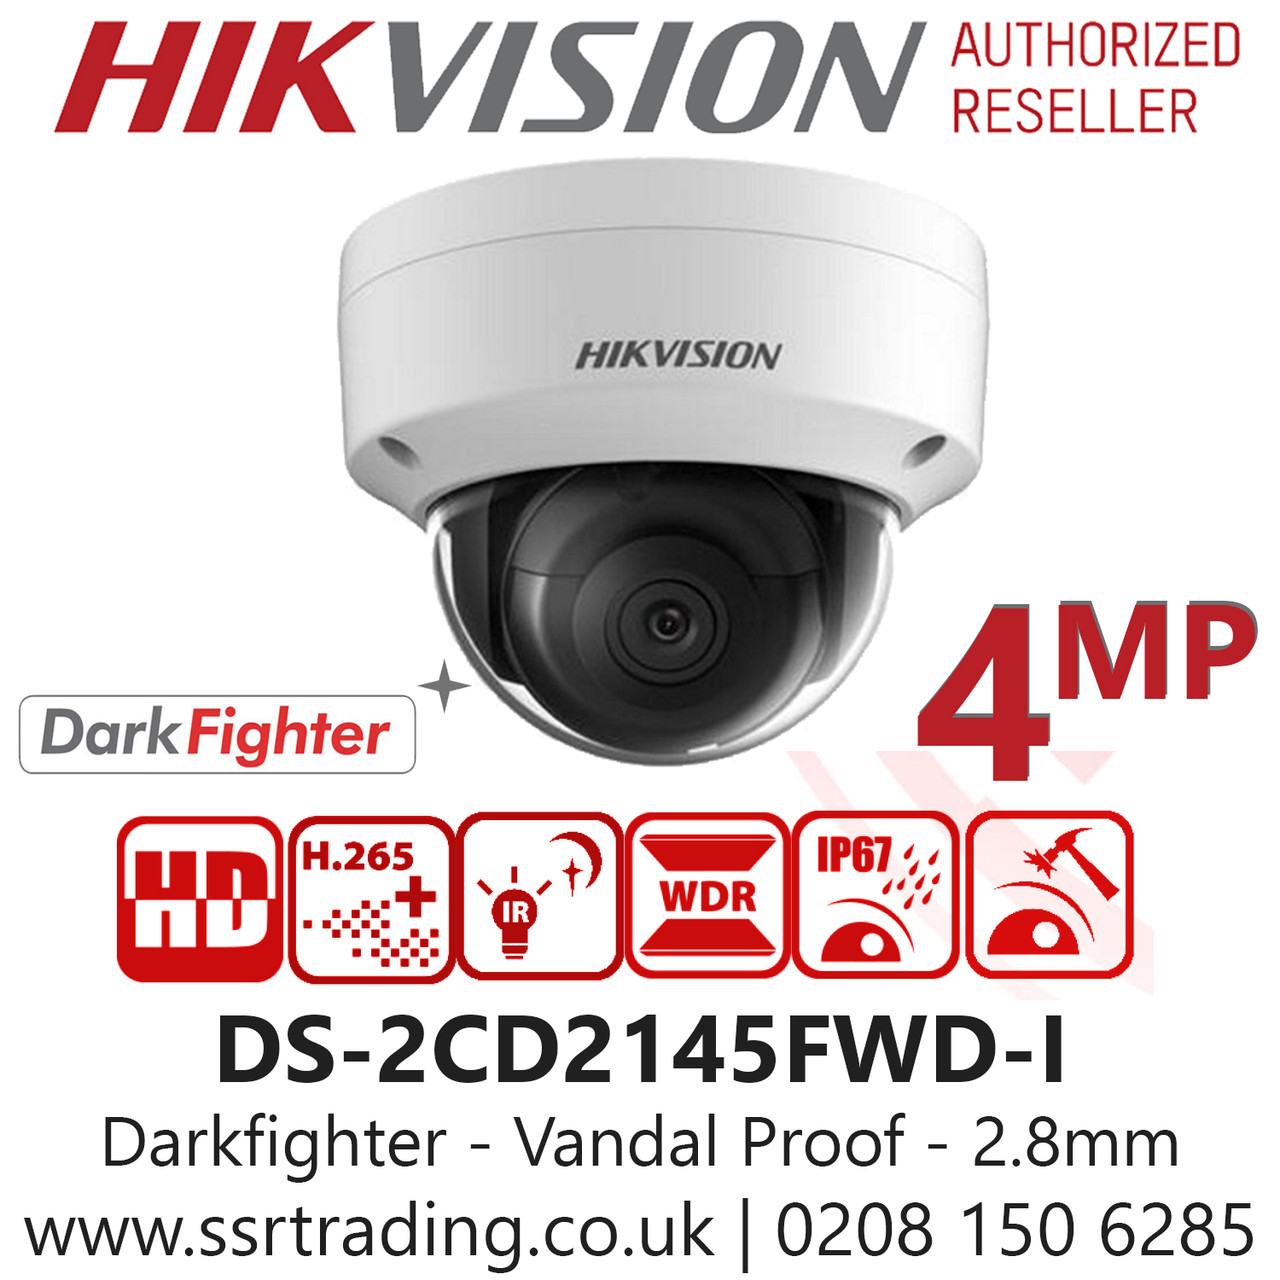 Hikvision 4MP 2.8mm IP PoE Darkfighter Vandal Dome Network Camera - 30m IR  distance - DS-2CD2145FWD-I